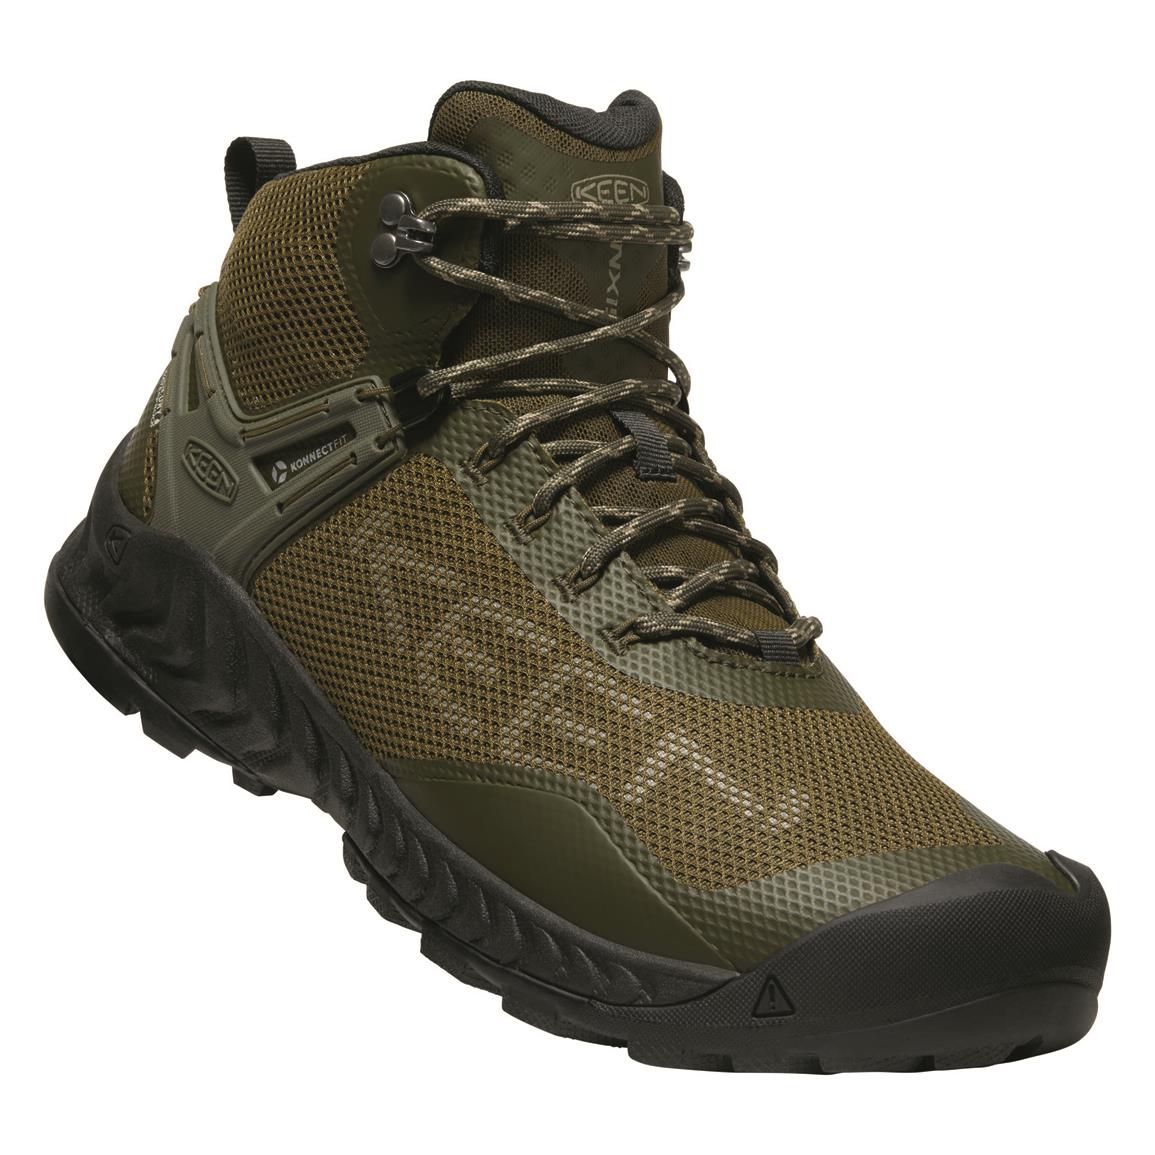 KEEN Men's NXIS EVO Waterproof Hiking Boots., Forest Night/dark Olive